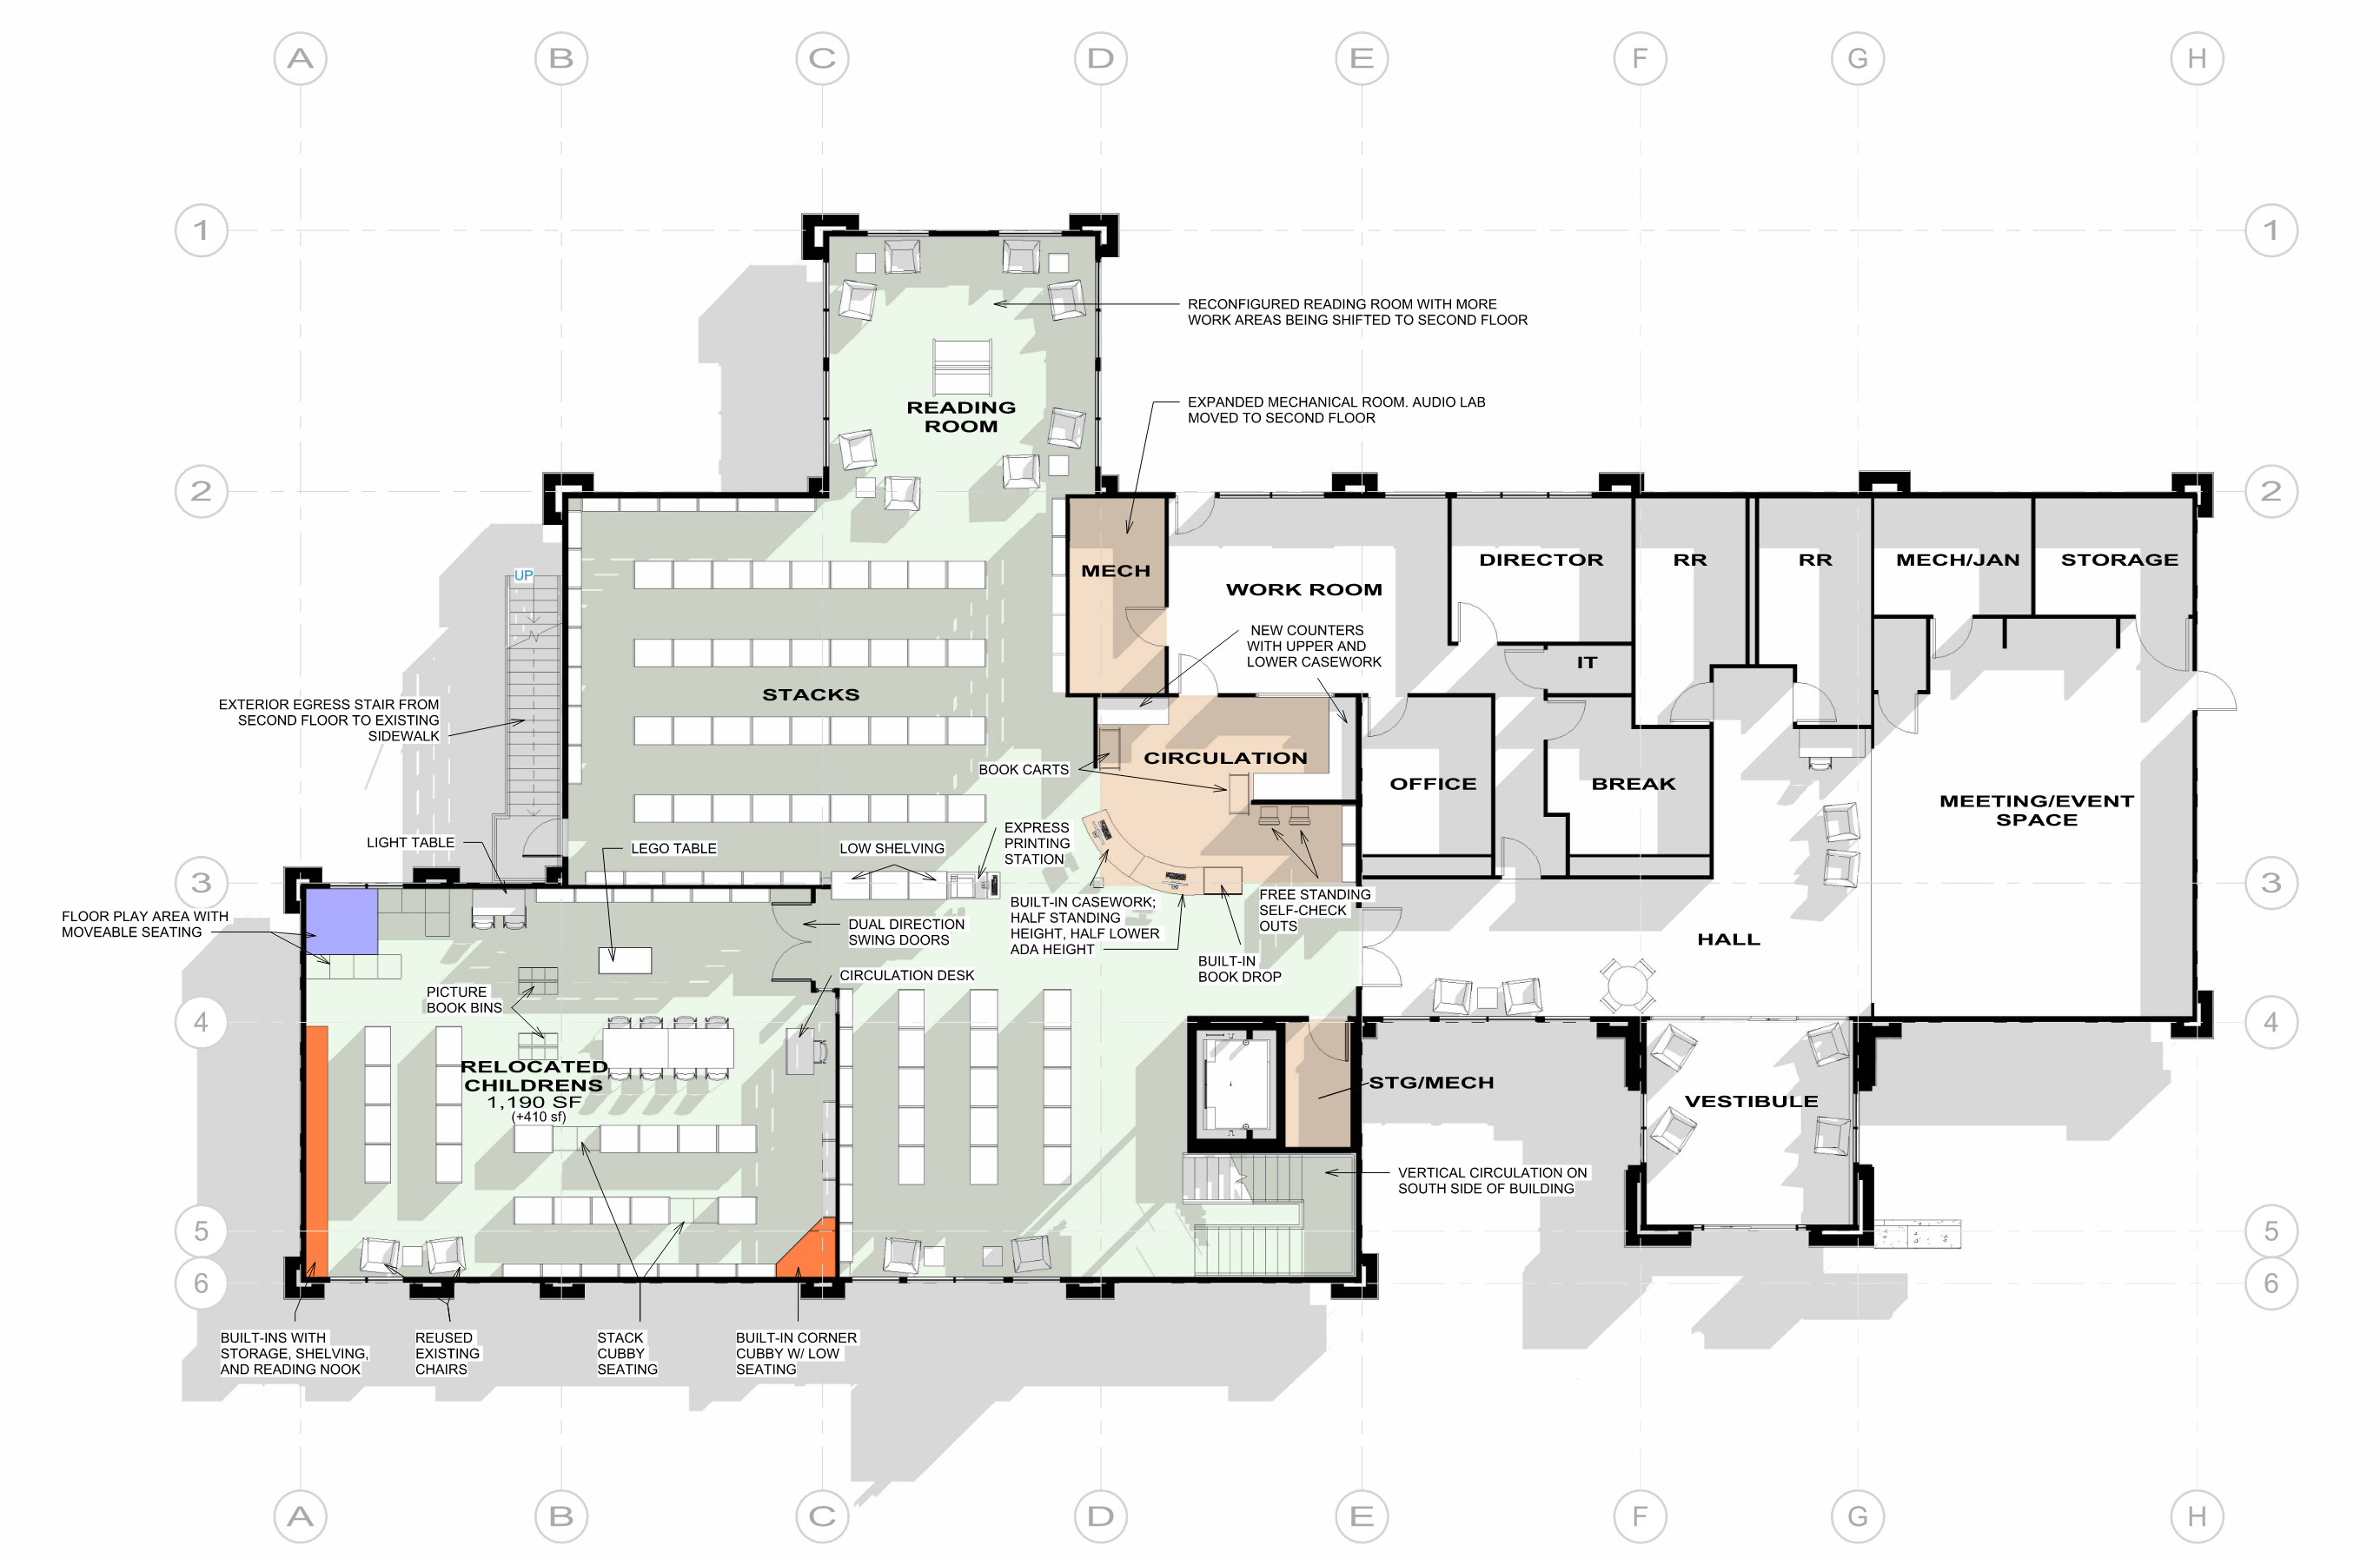 Proposed 1st floor reconfiguration